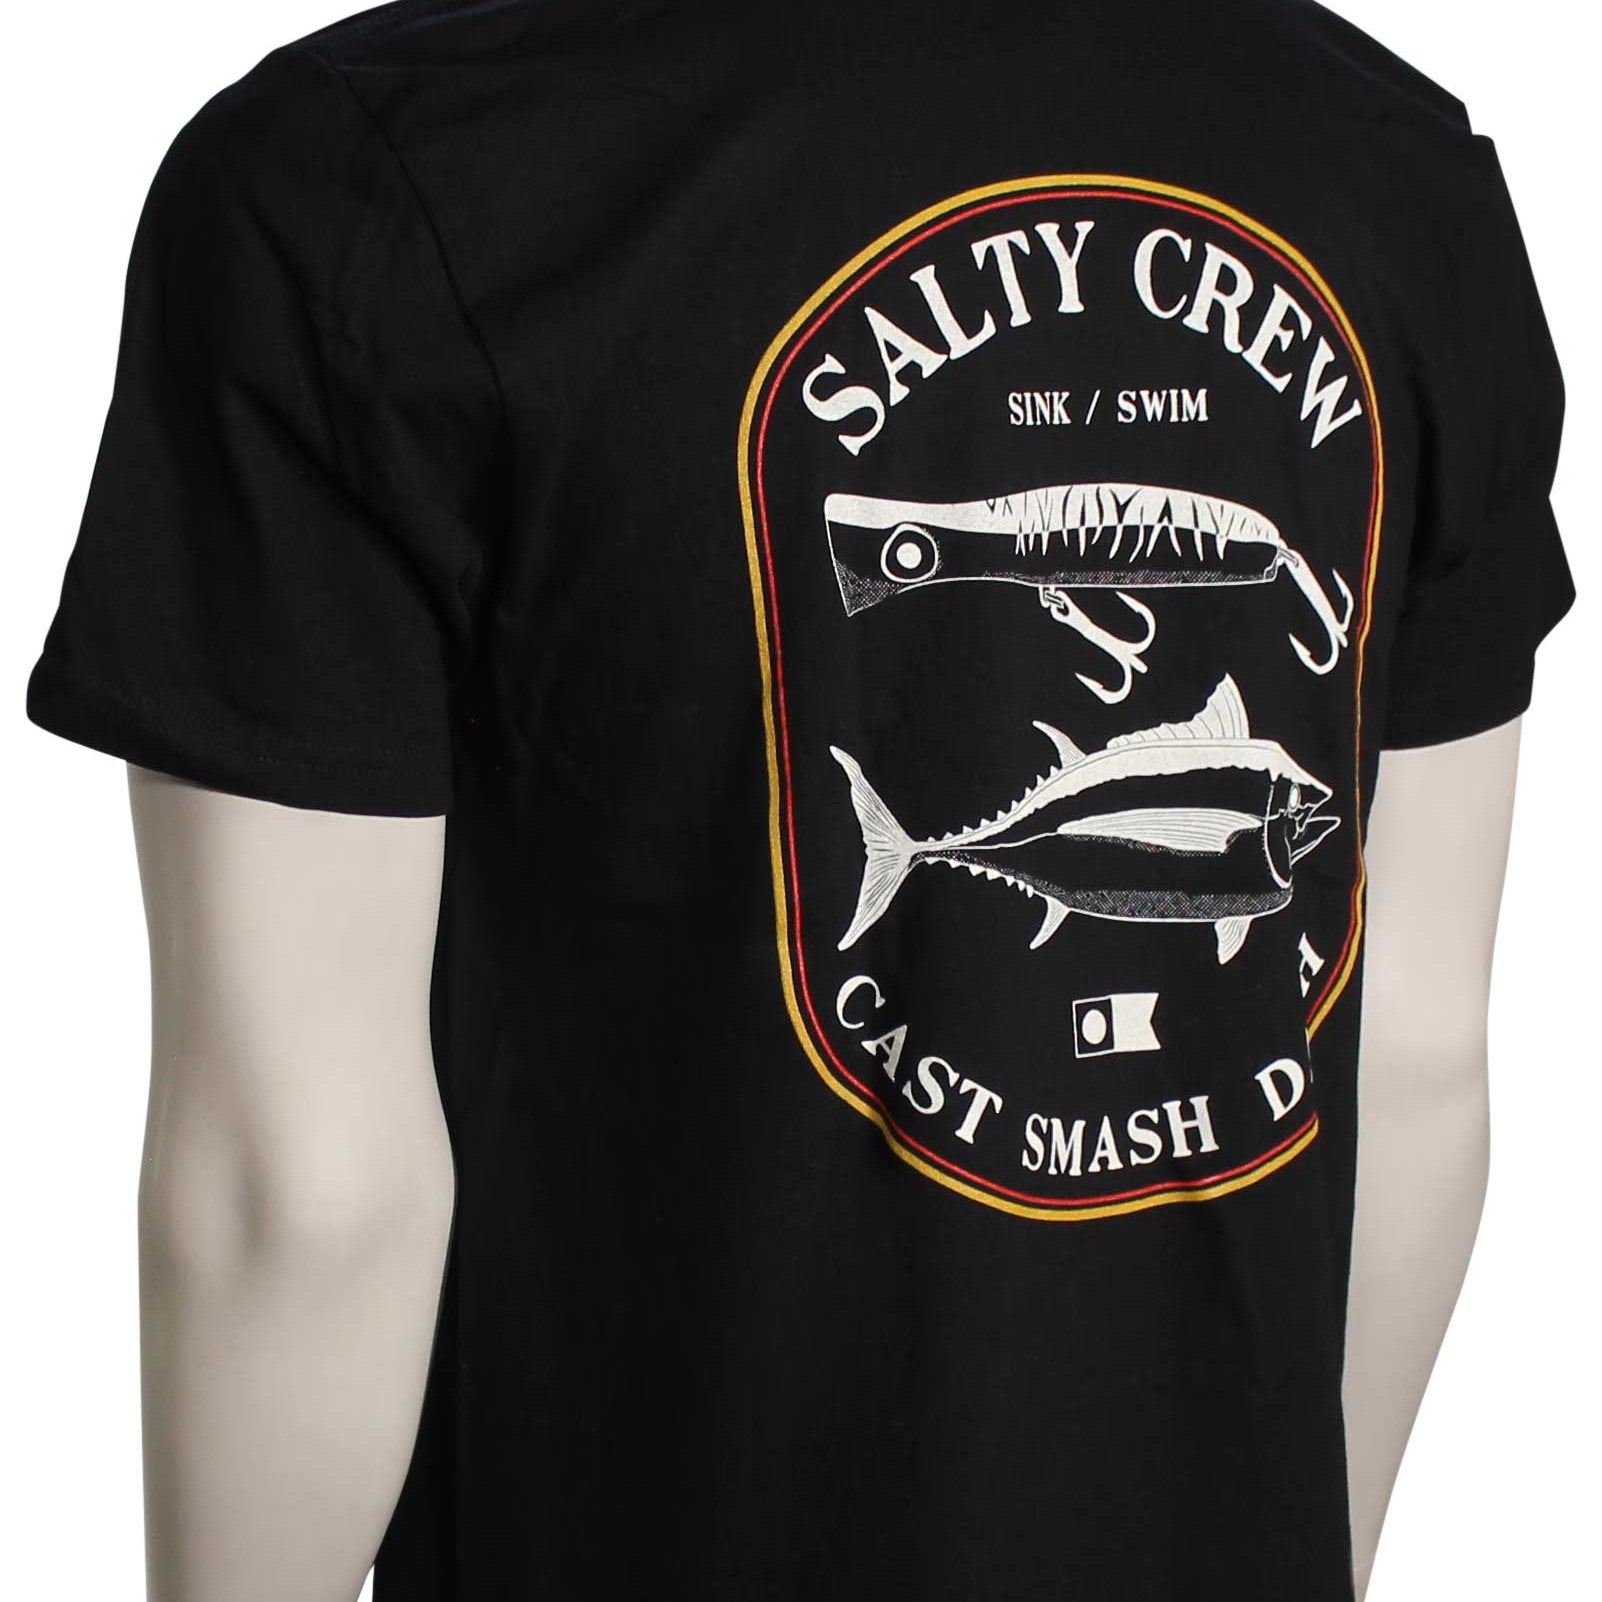 Salty Crew Surface Standard SS Tee Black L